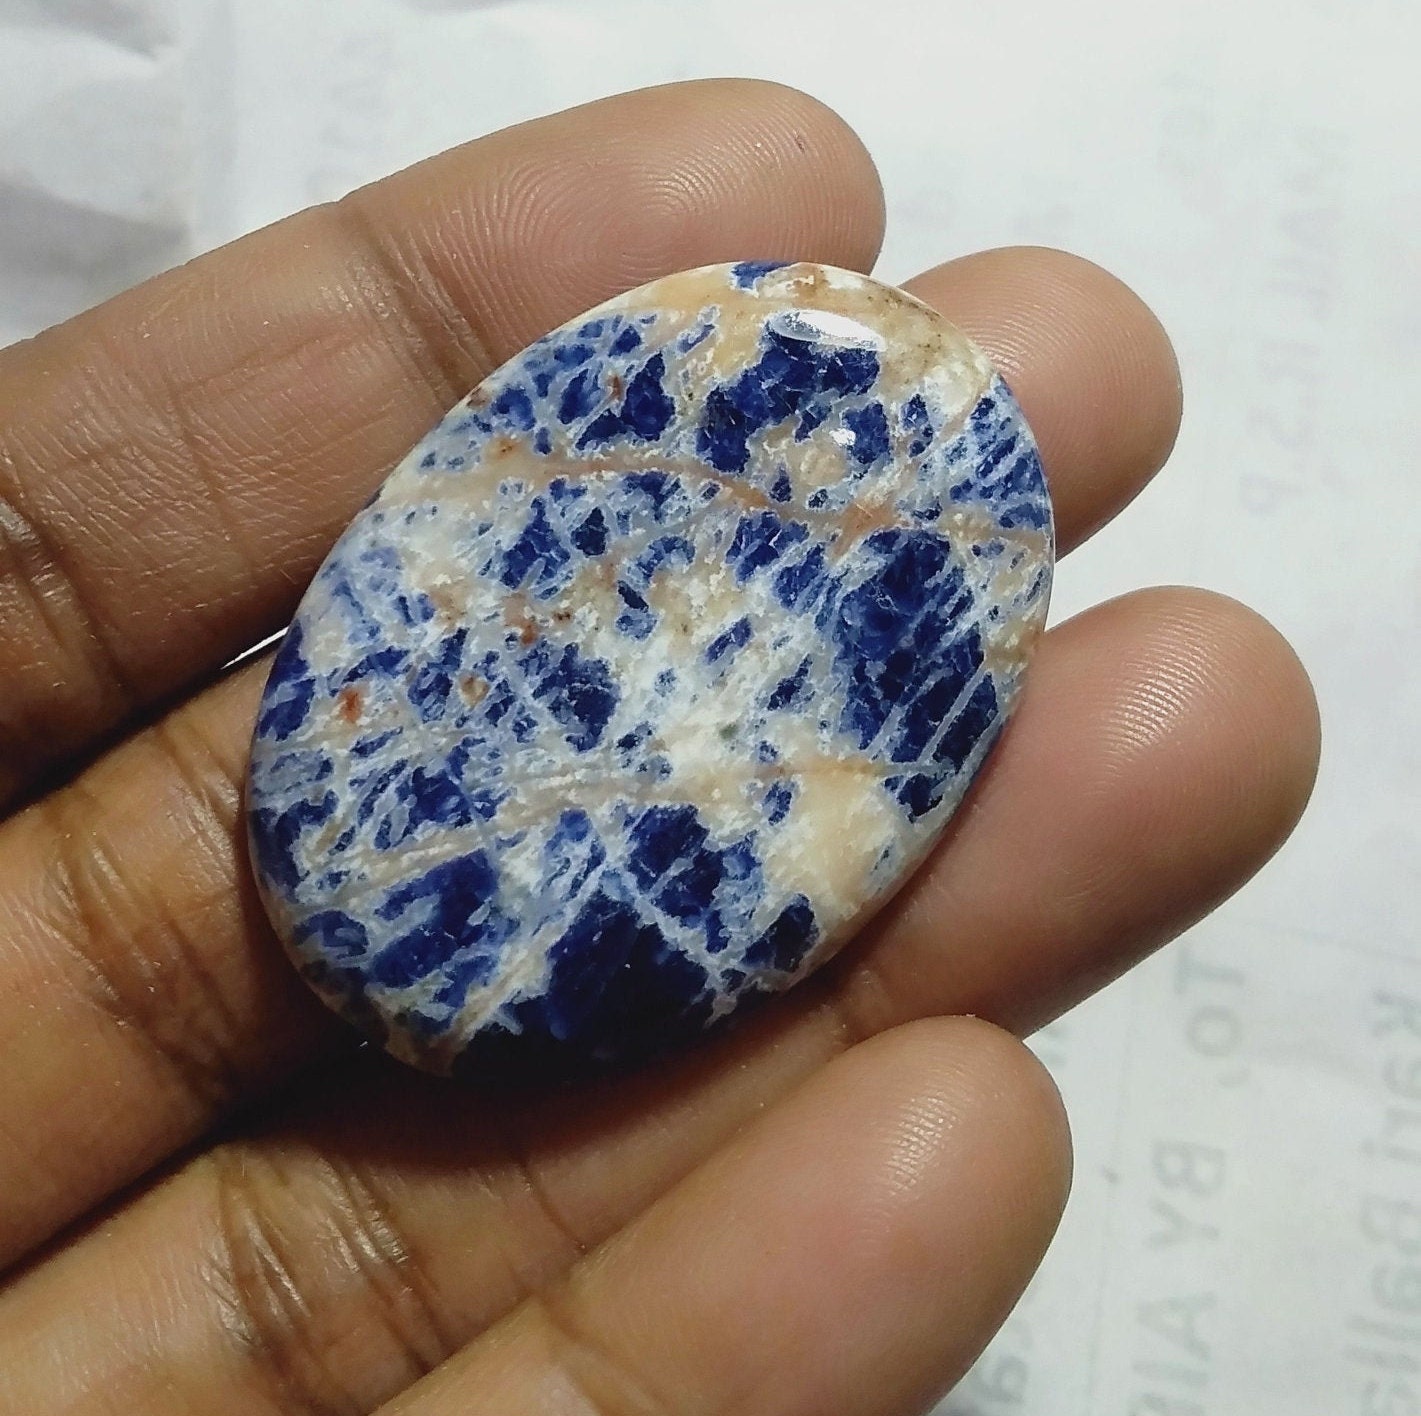 Awesome  Sodalite  stone gemstone cobochon loose stone jewelery beauty making Semi Precious 43# 1227